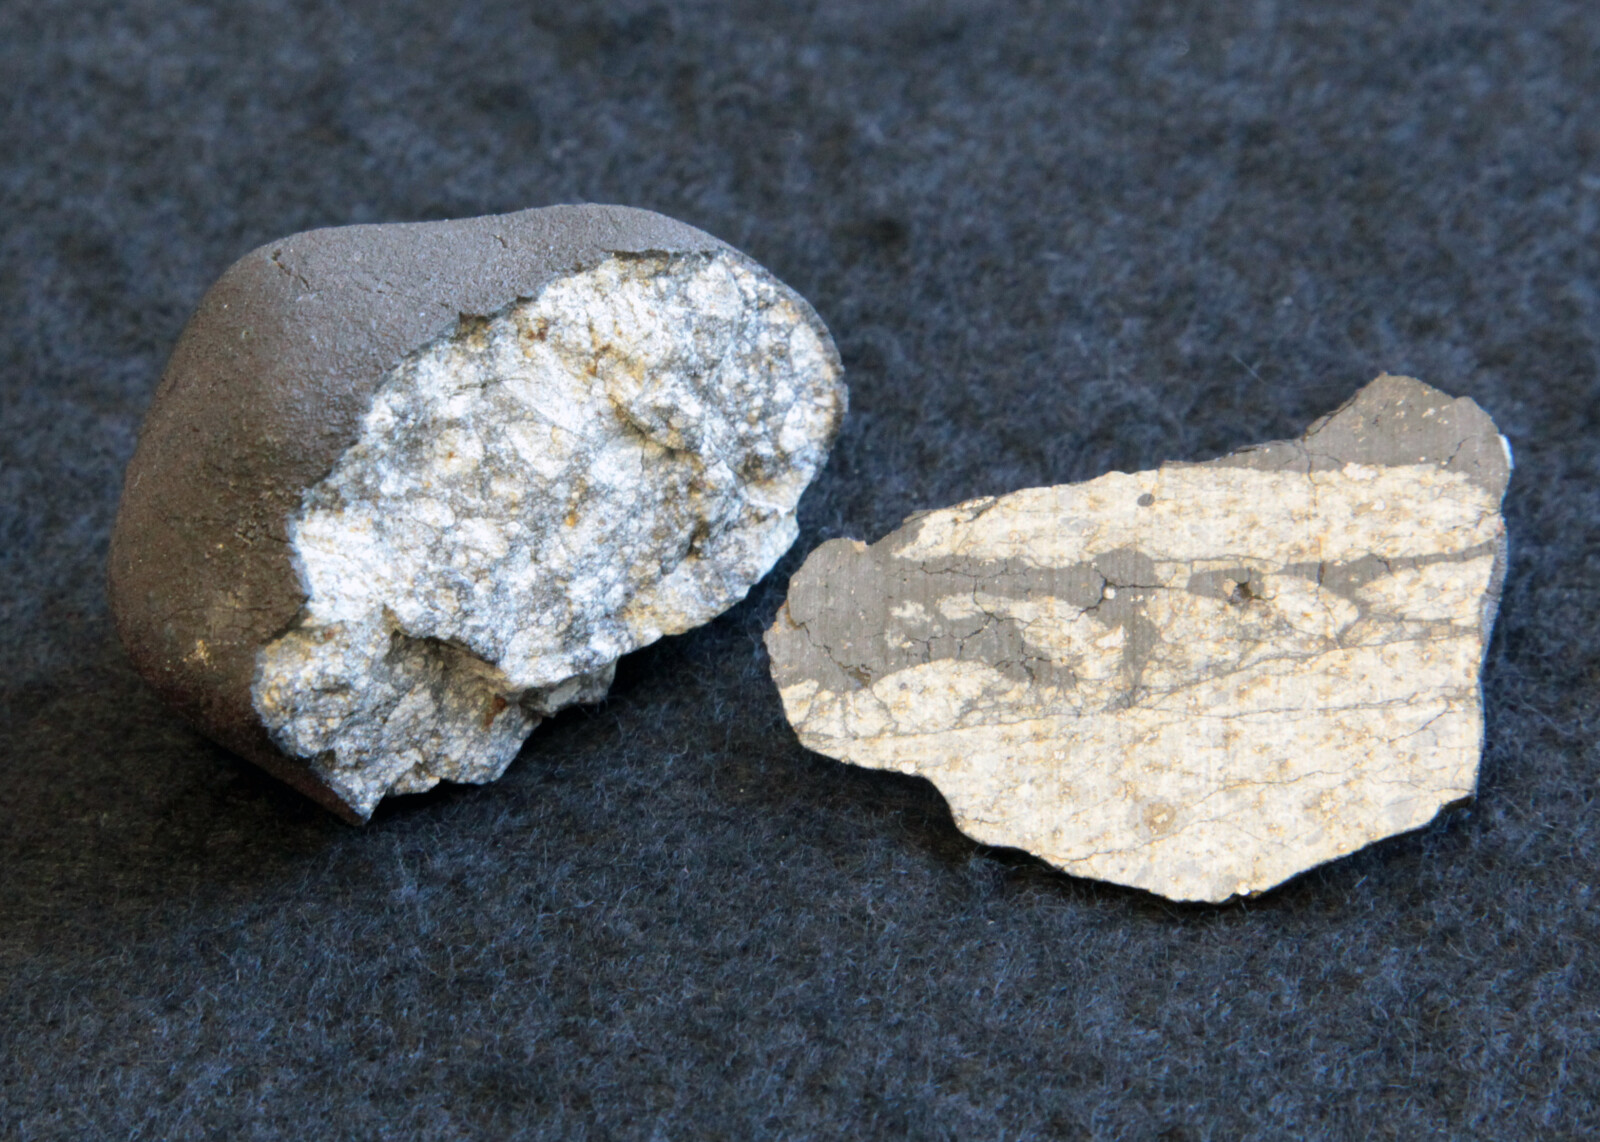 Replica models of two meteorites